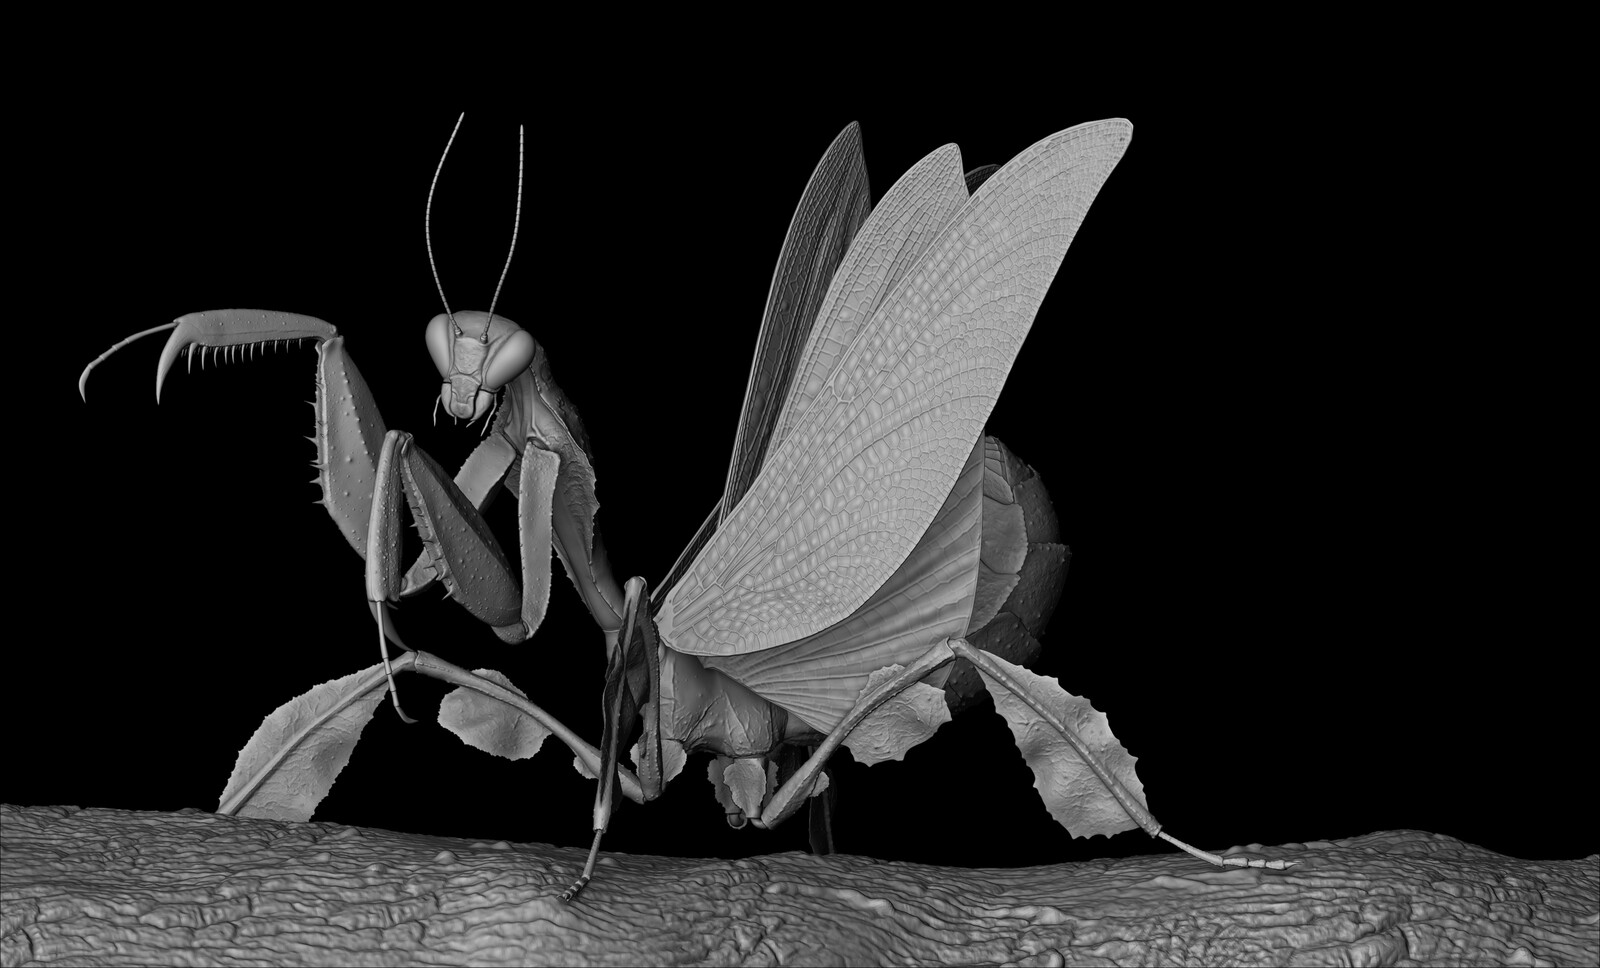 Mantis animations